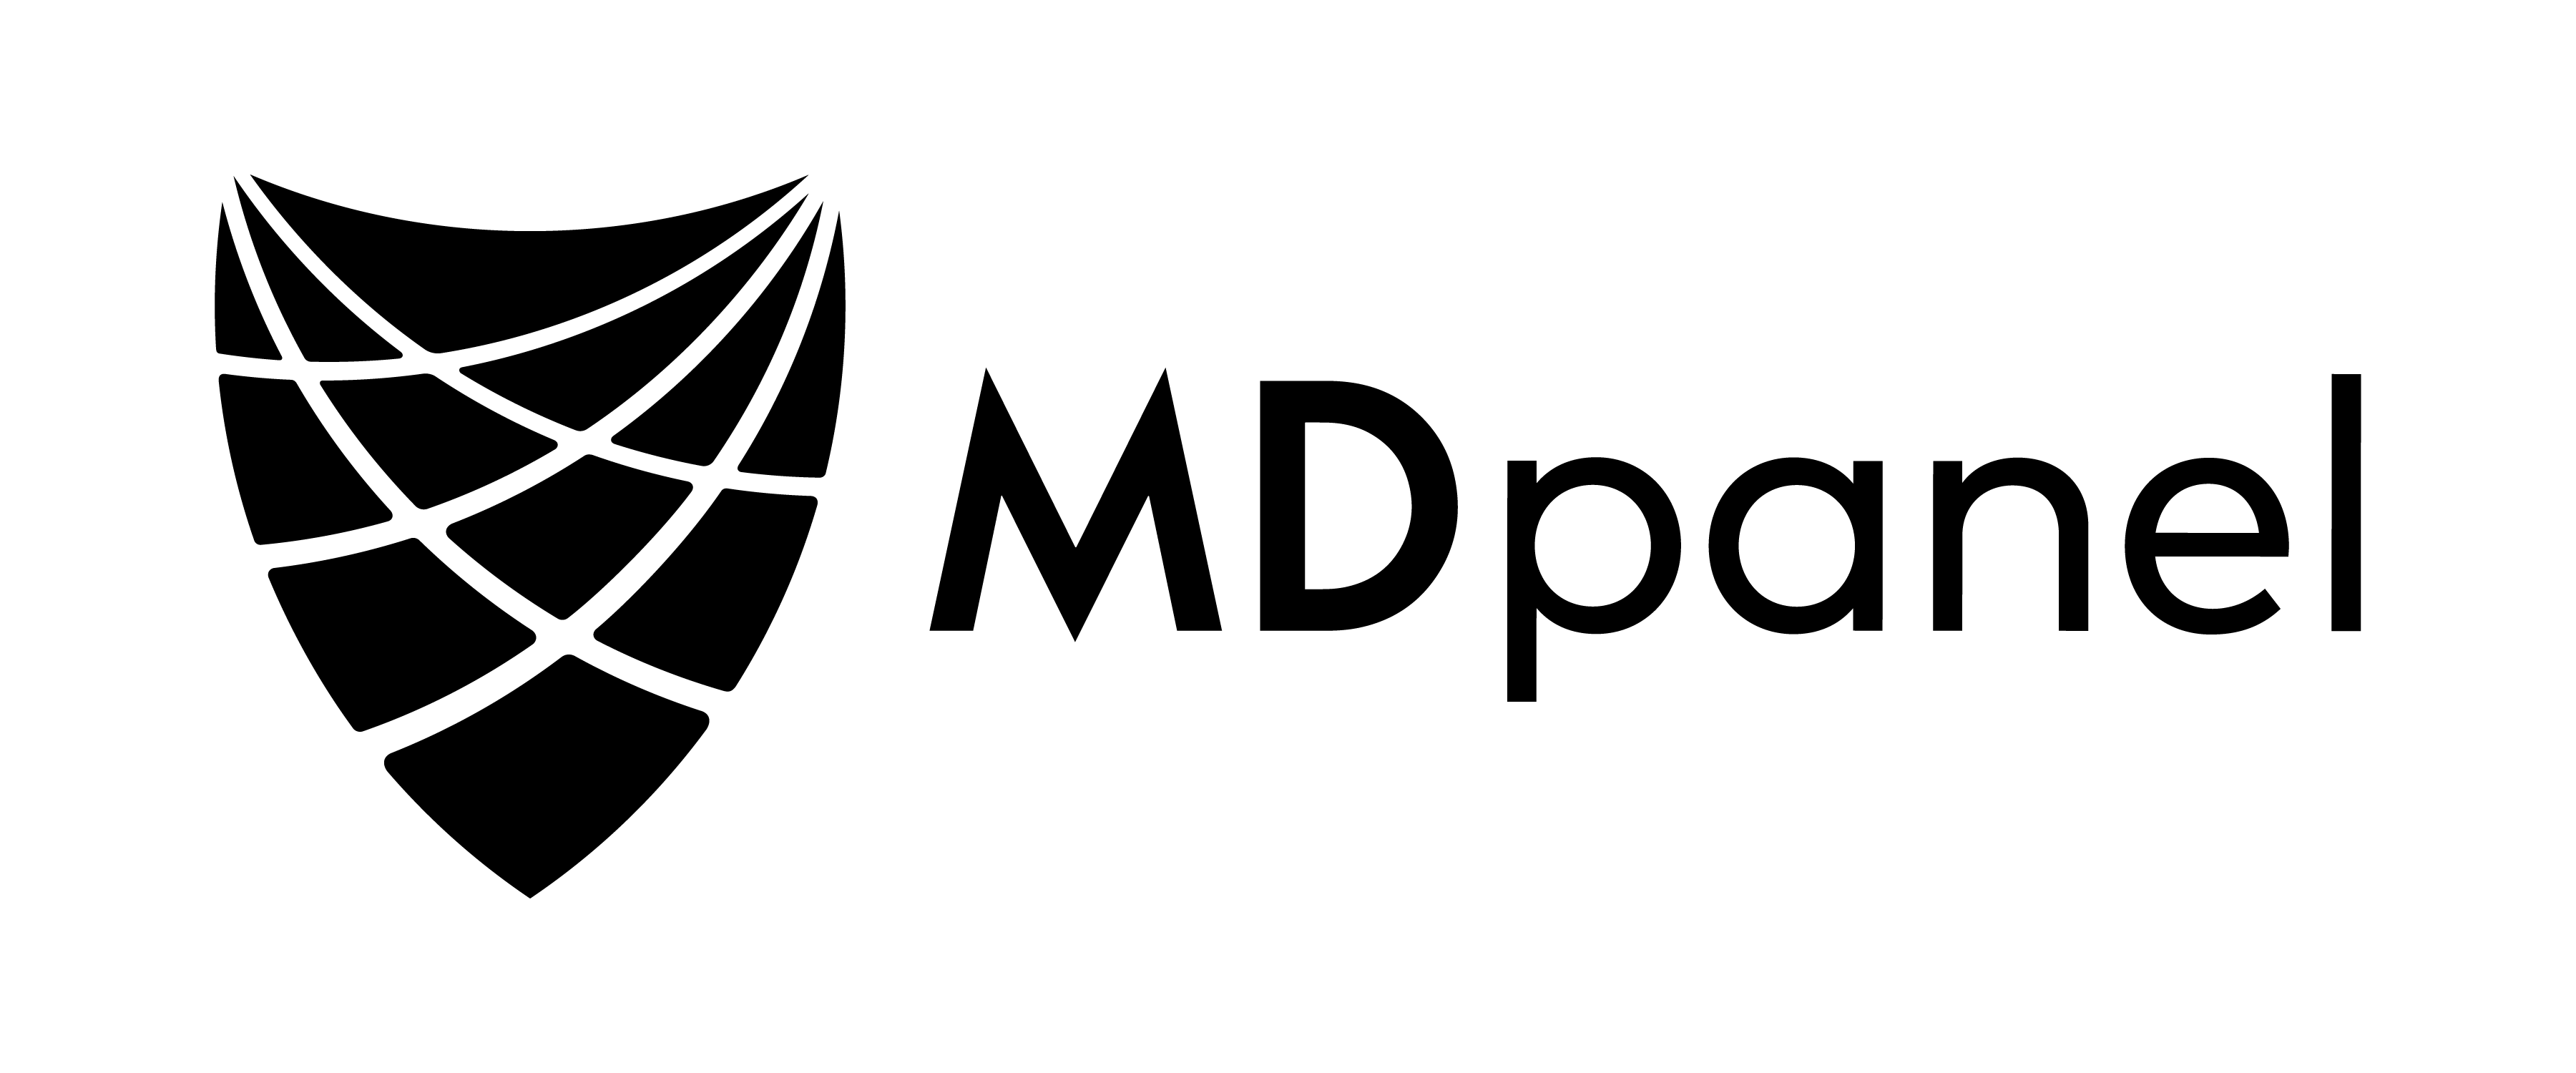 MDpanel logo